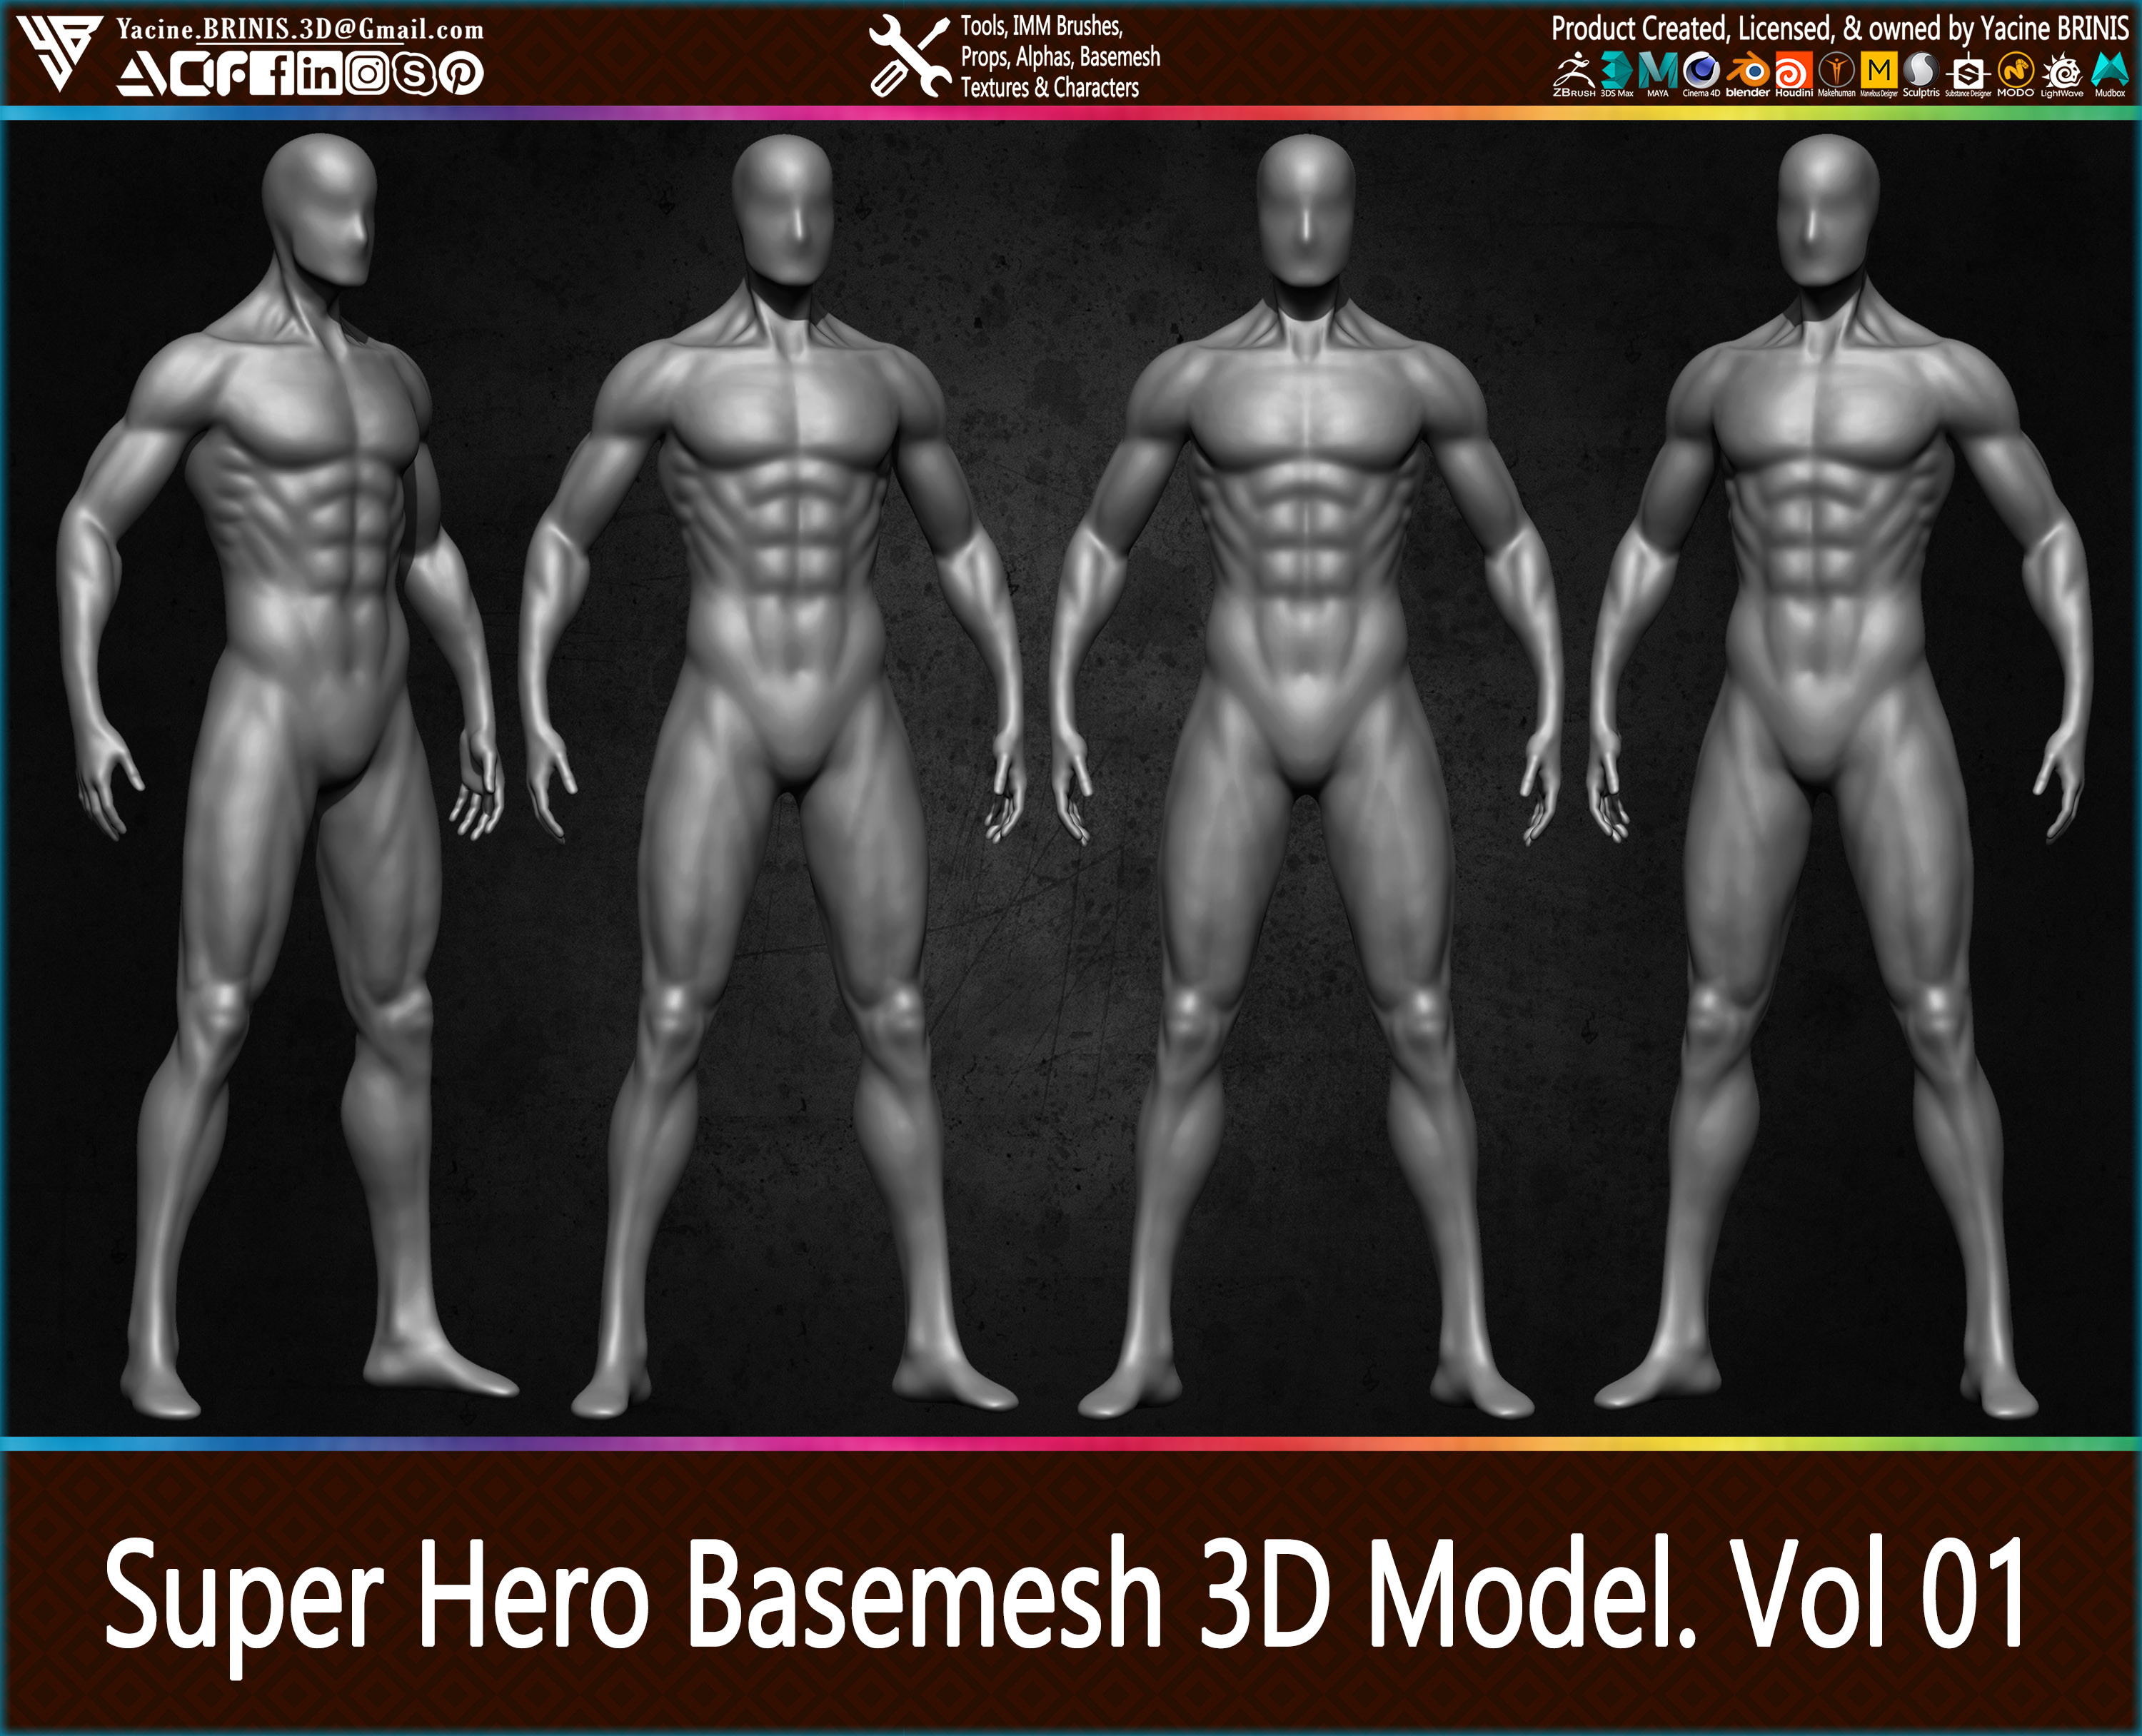 Super Hero Basemesh 3D Model Male By Yacine BRINIS Vol 01 Set 008